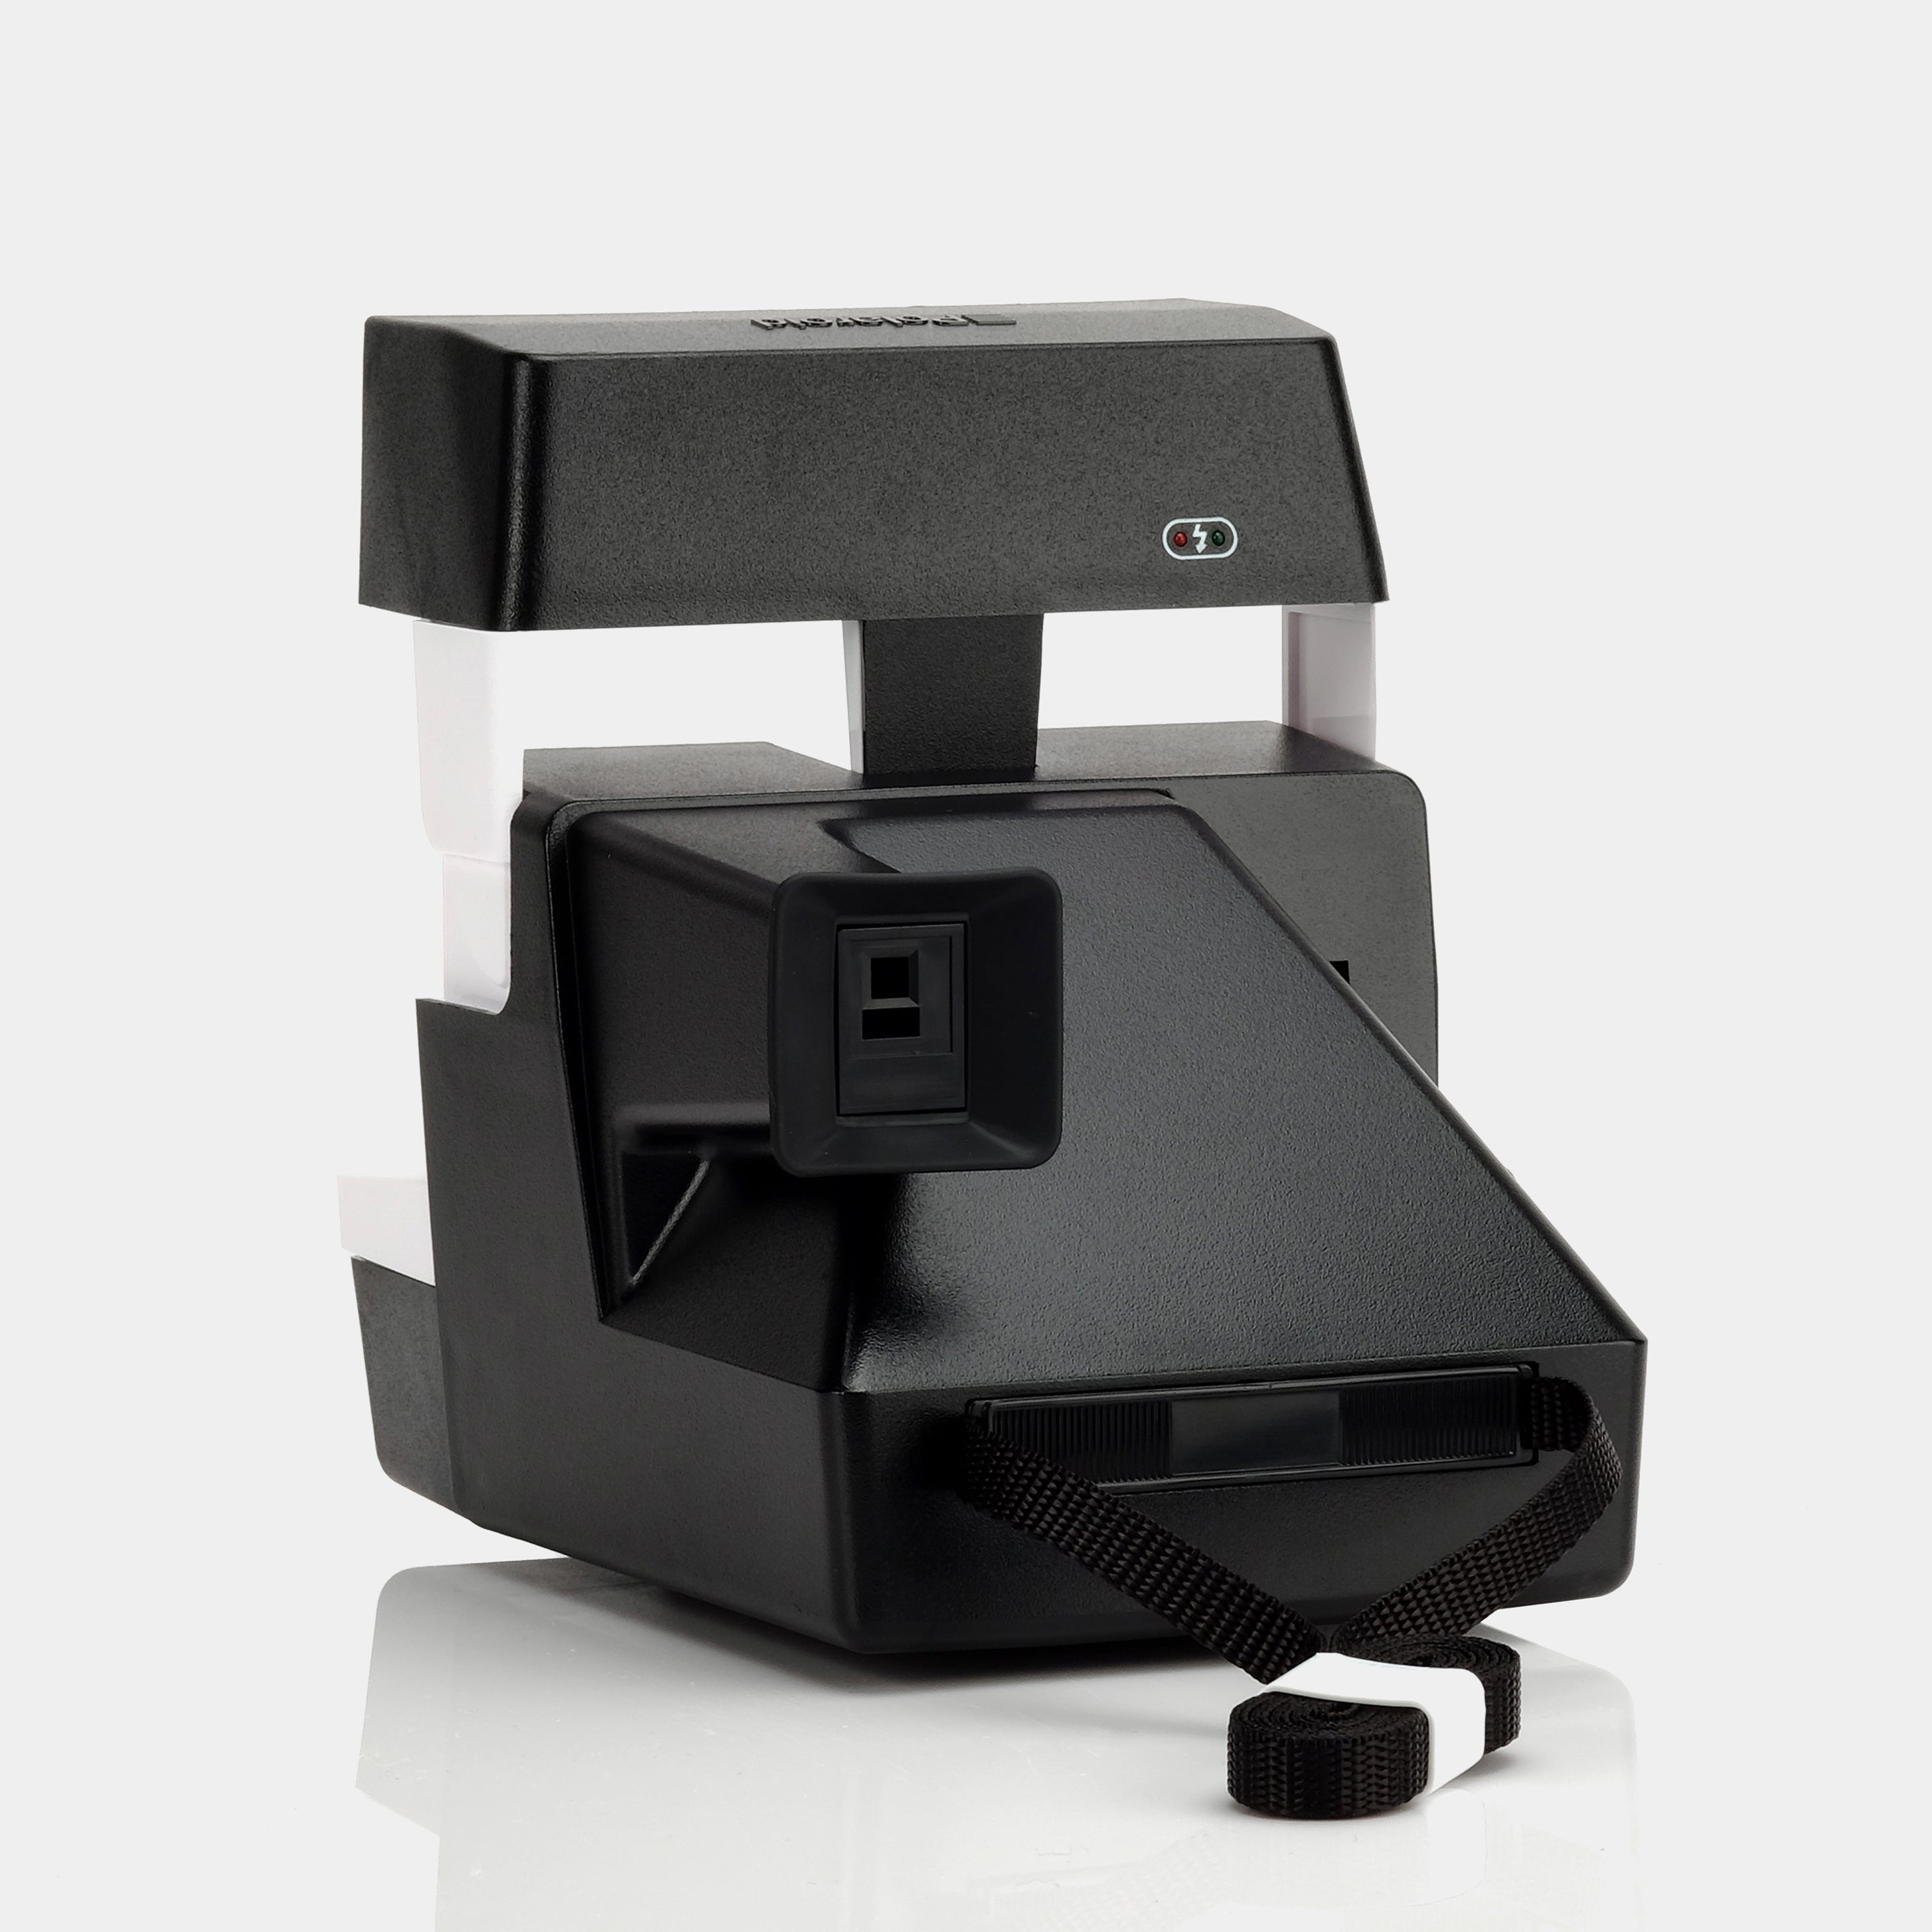 Polaroid 600 Black And White Instant Film Camera